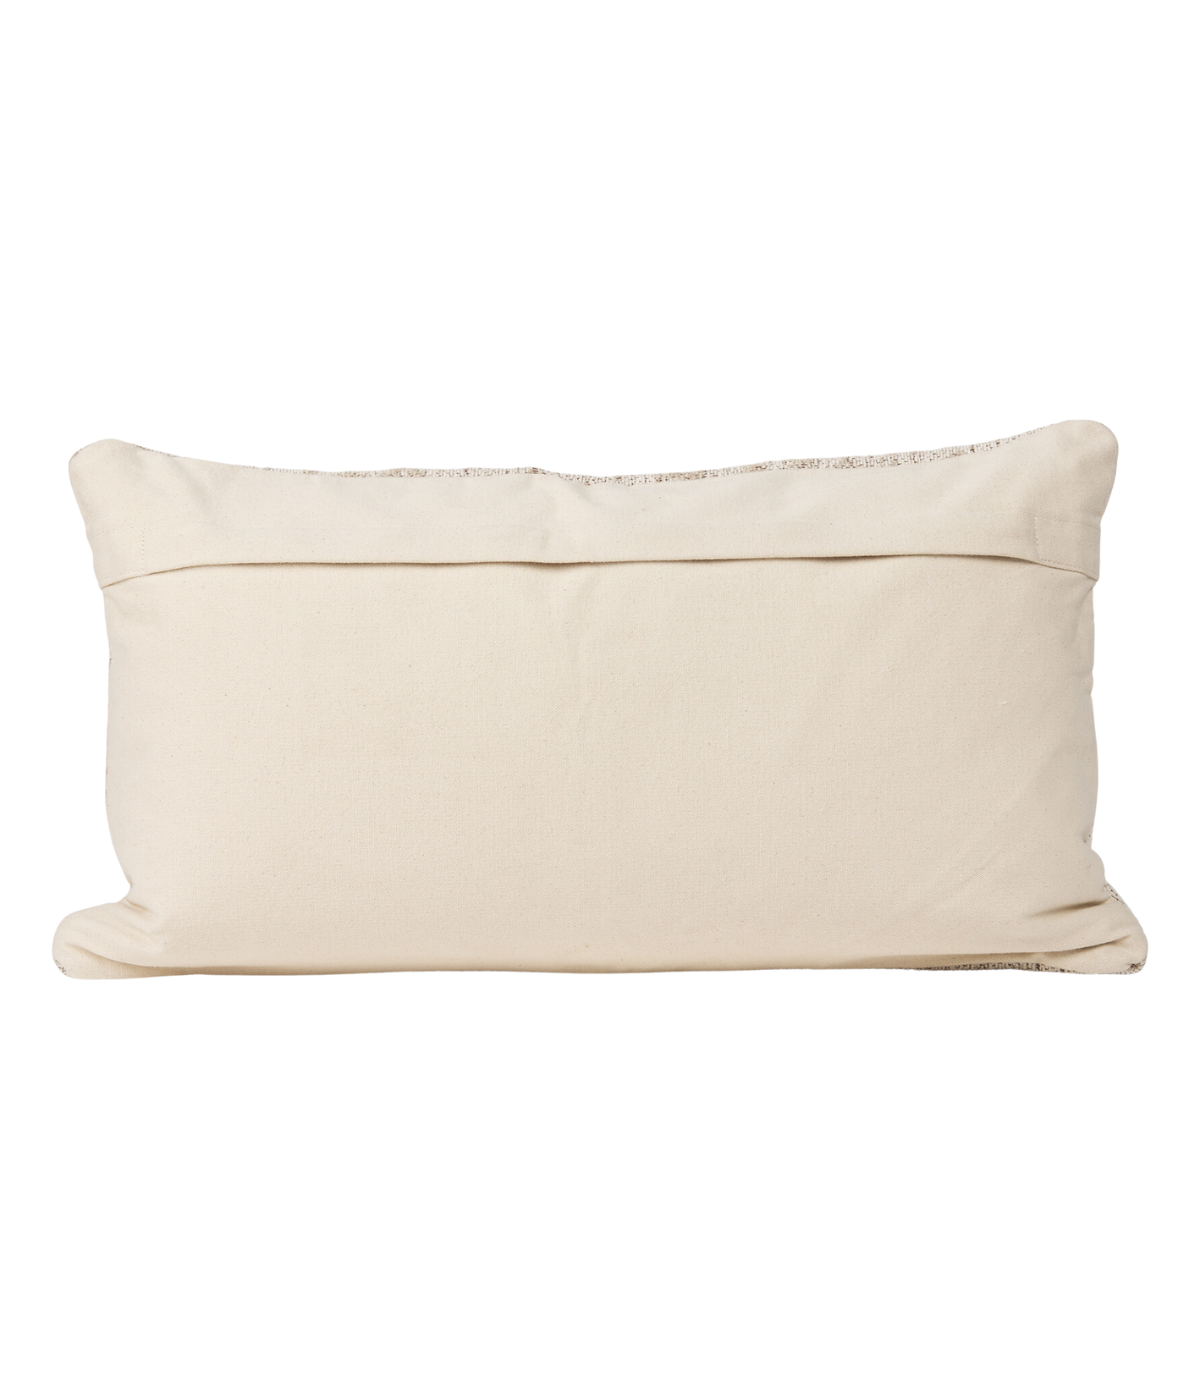 Khloe Pillow